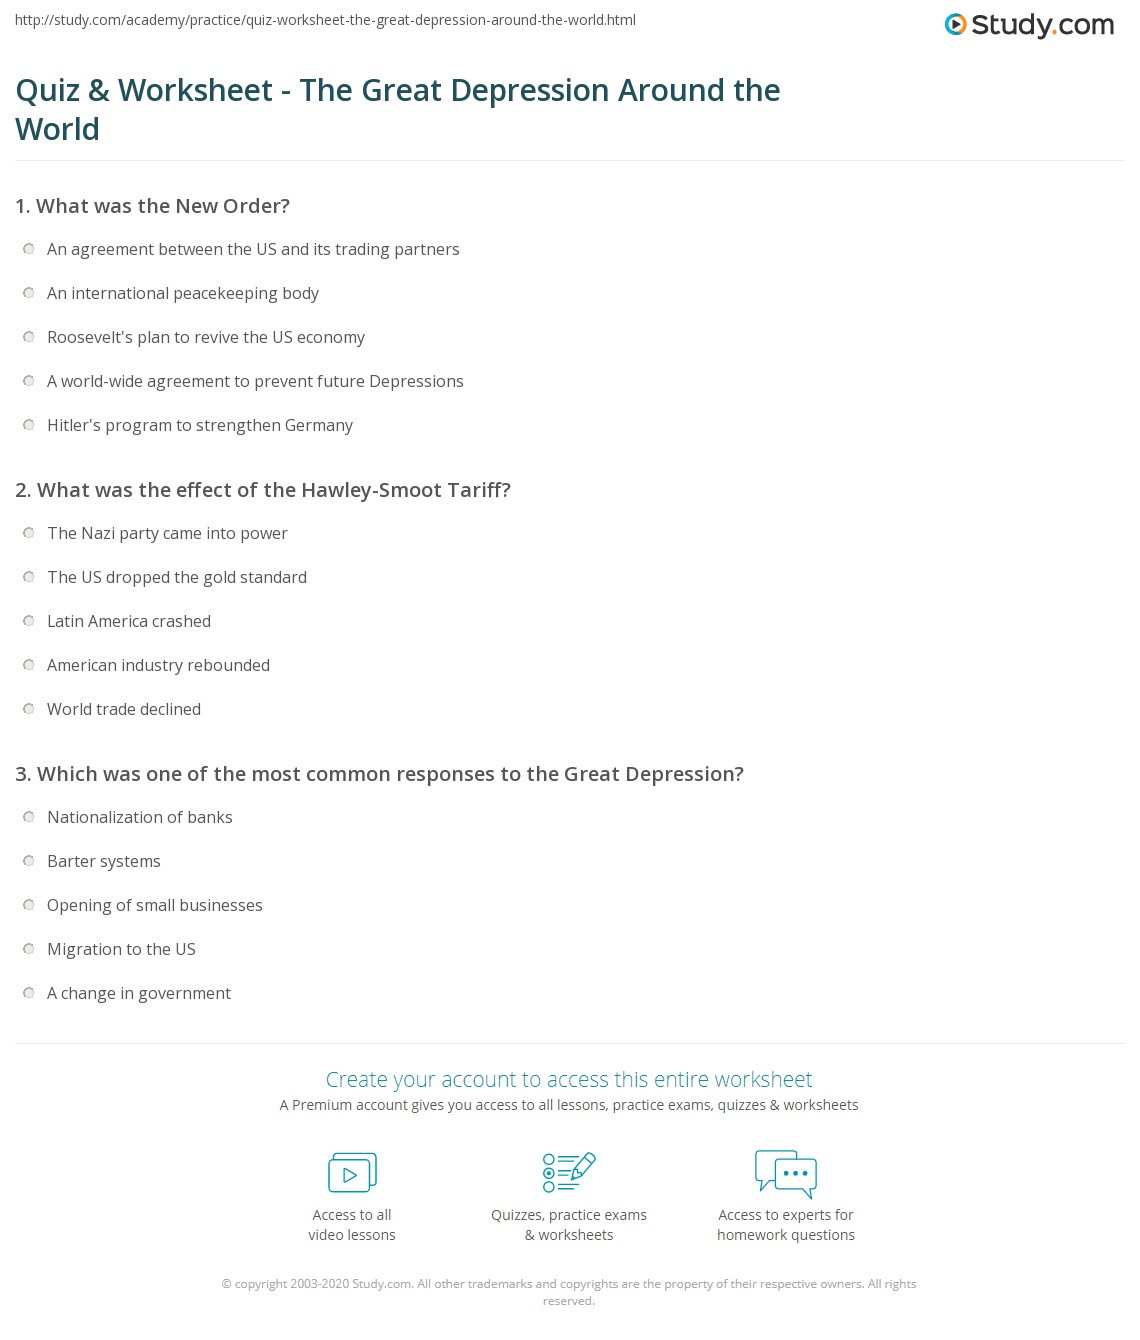 The Great Depression Worksheet Quiz &amp; Worksheet the Great Depression Around the World